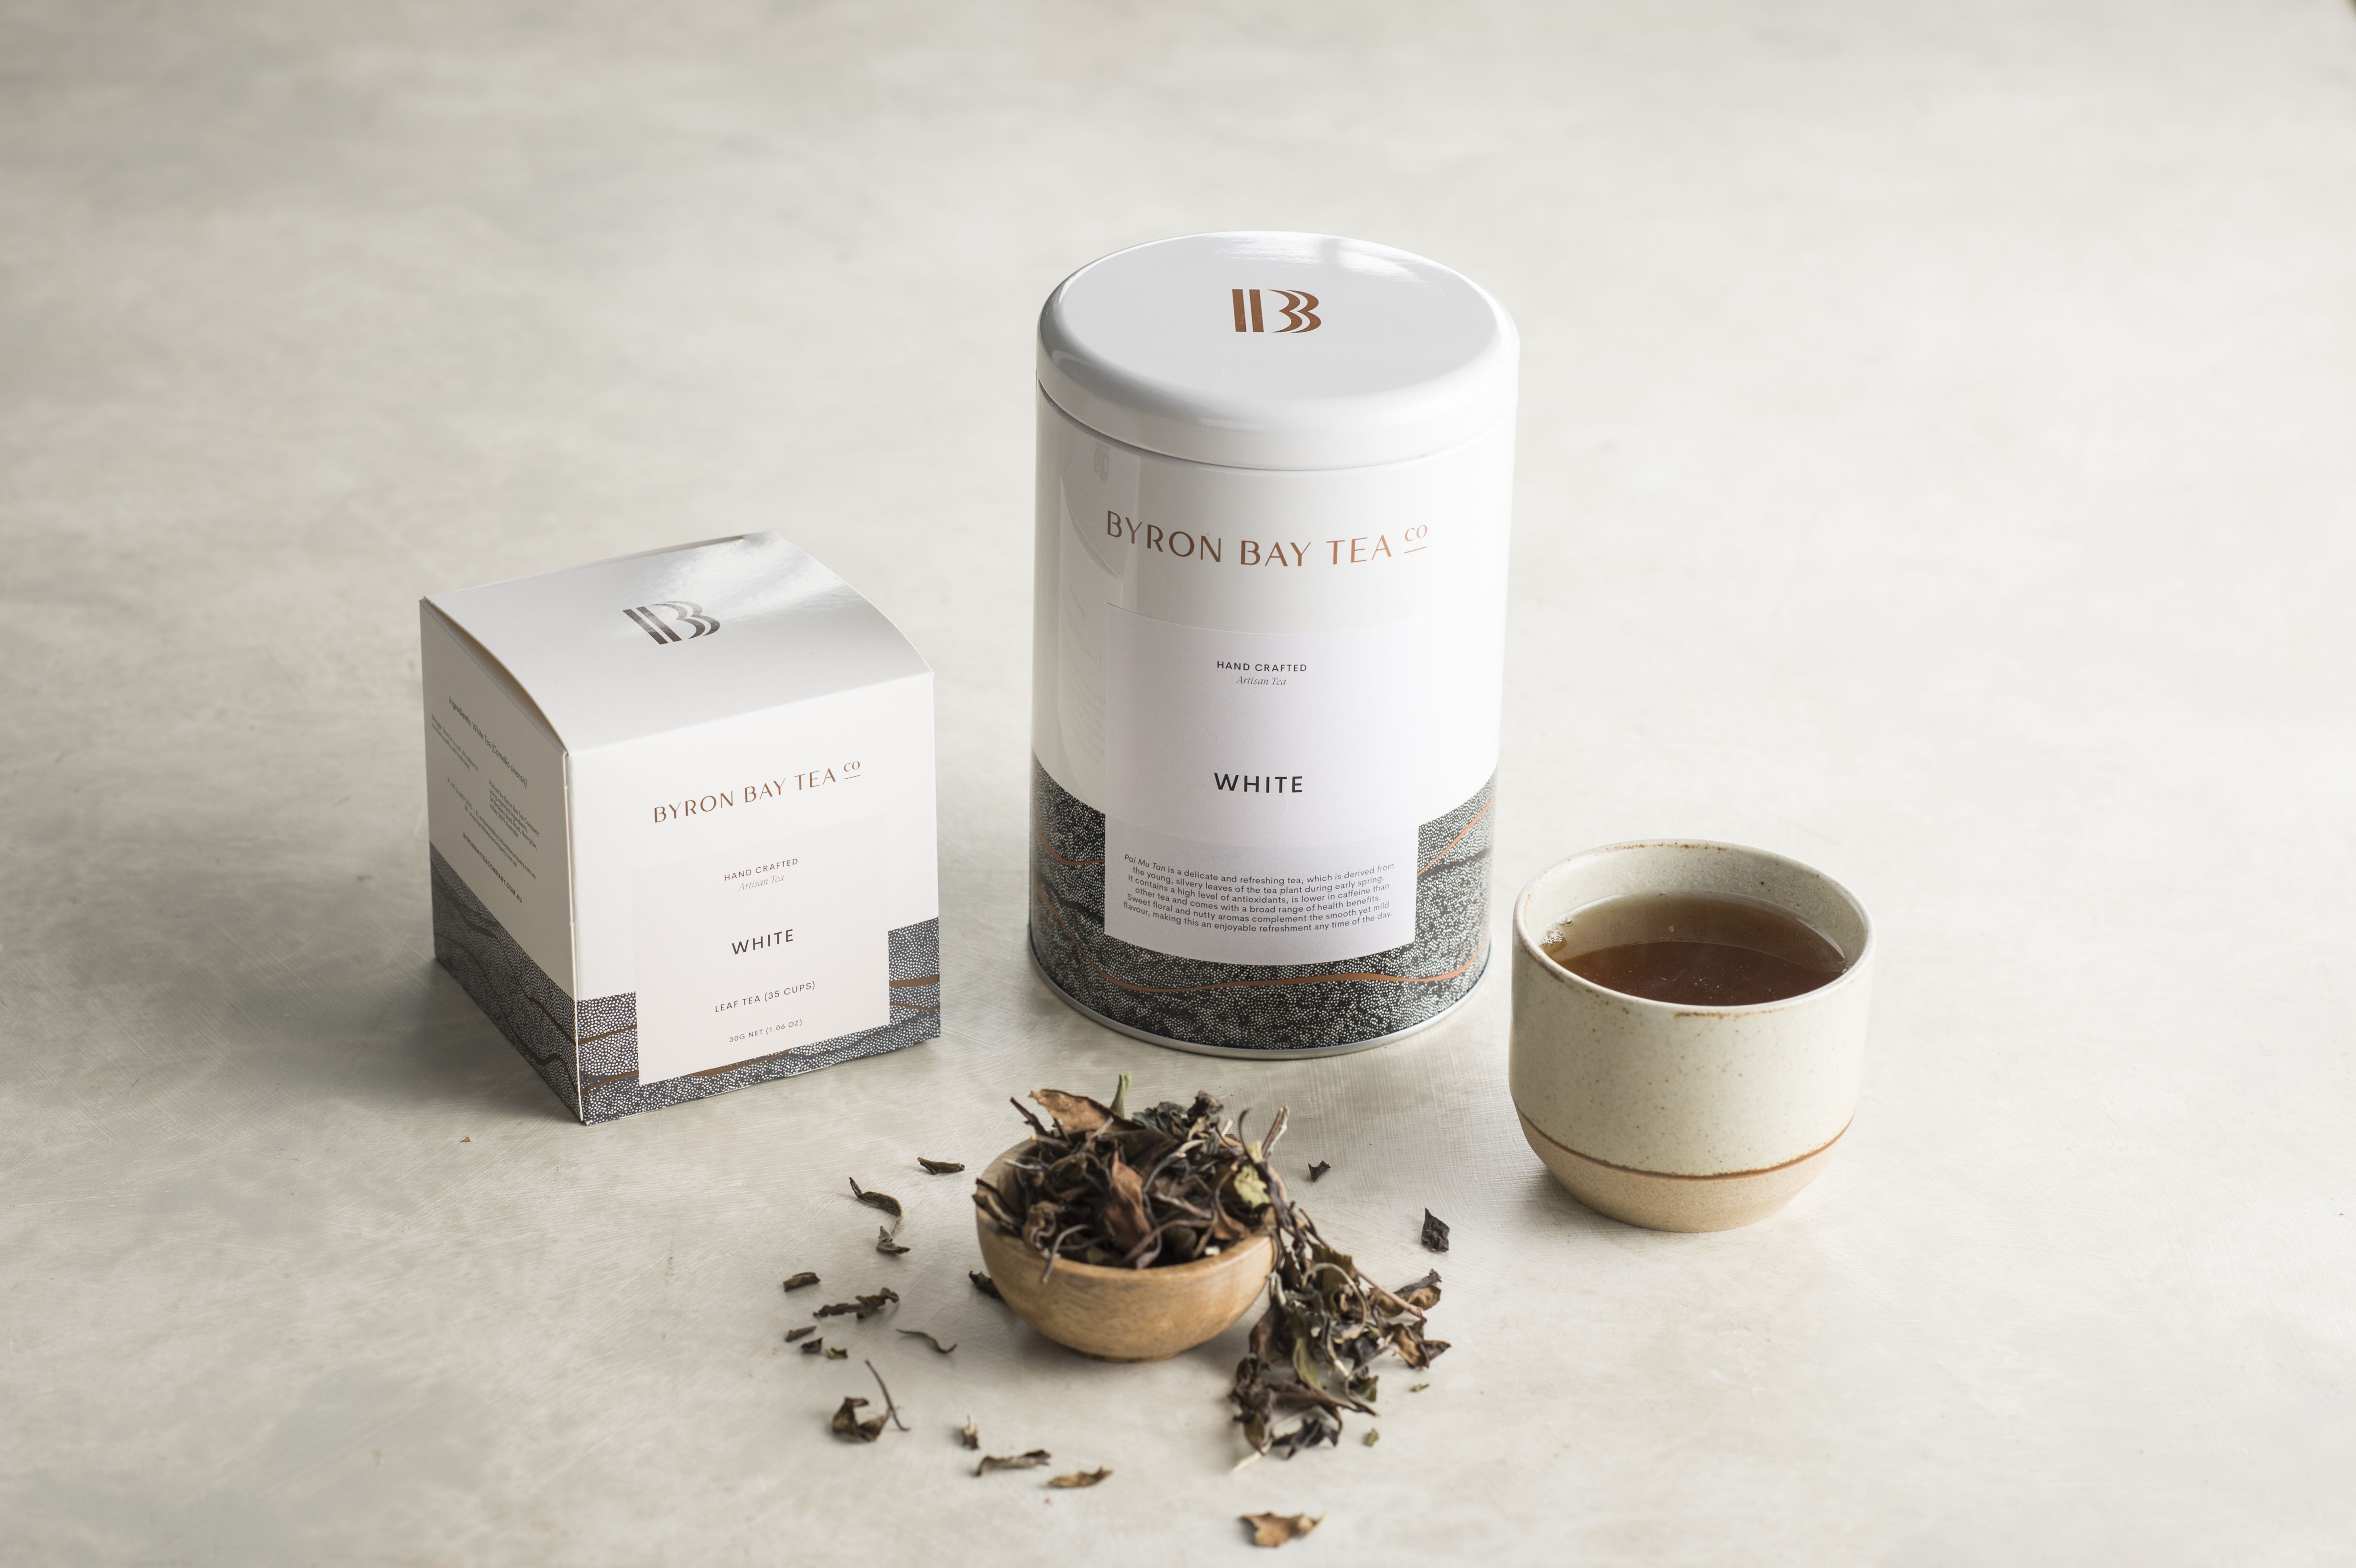 byron bay tea company white tea box and tin next to brewed cup of white tea on polished concrete